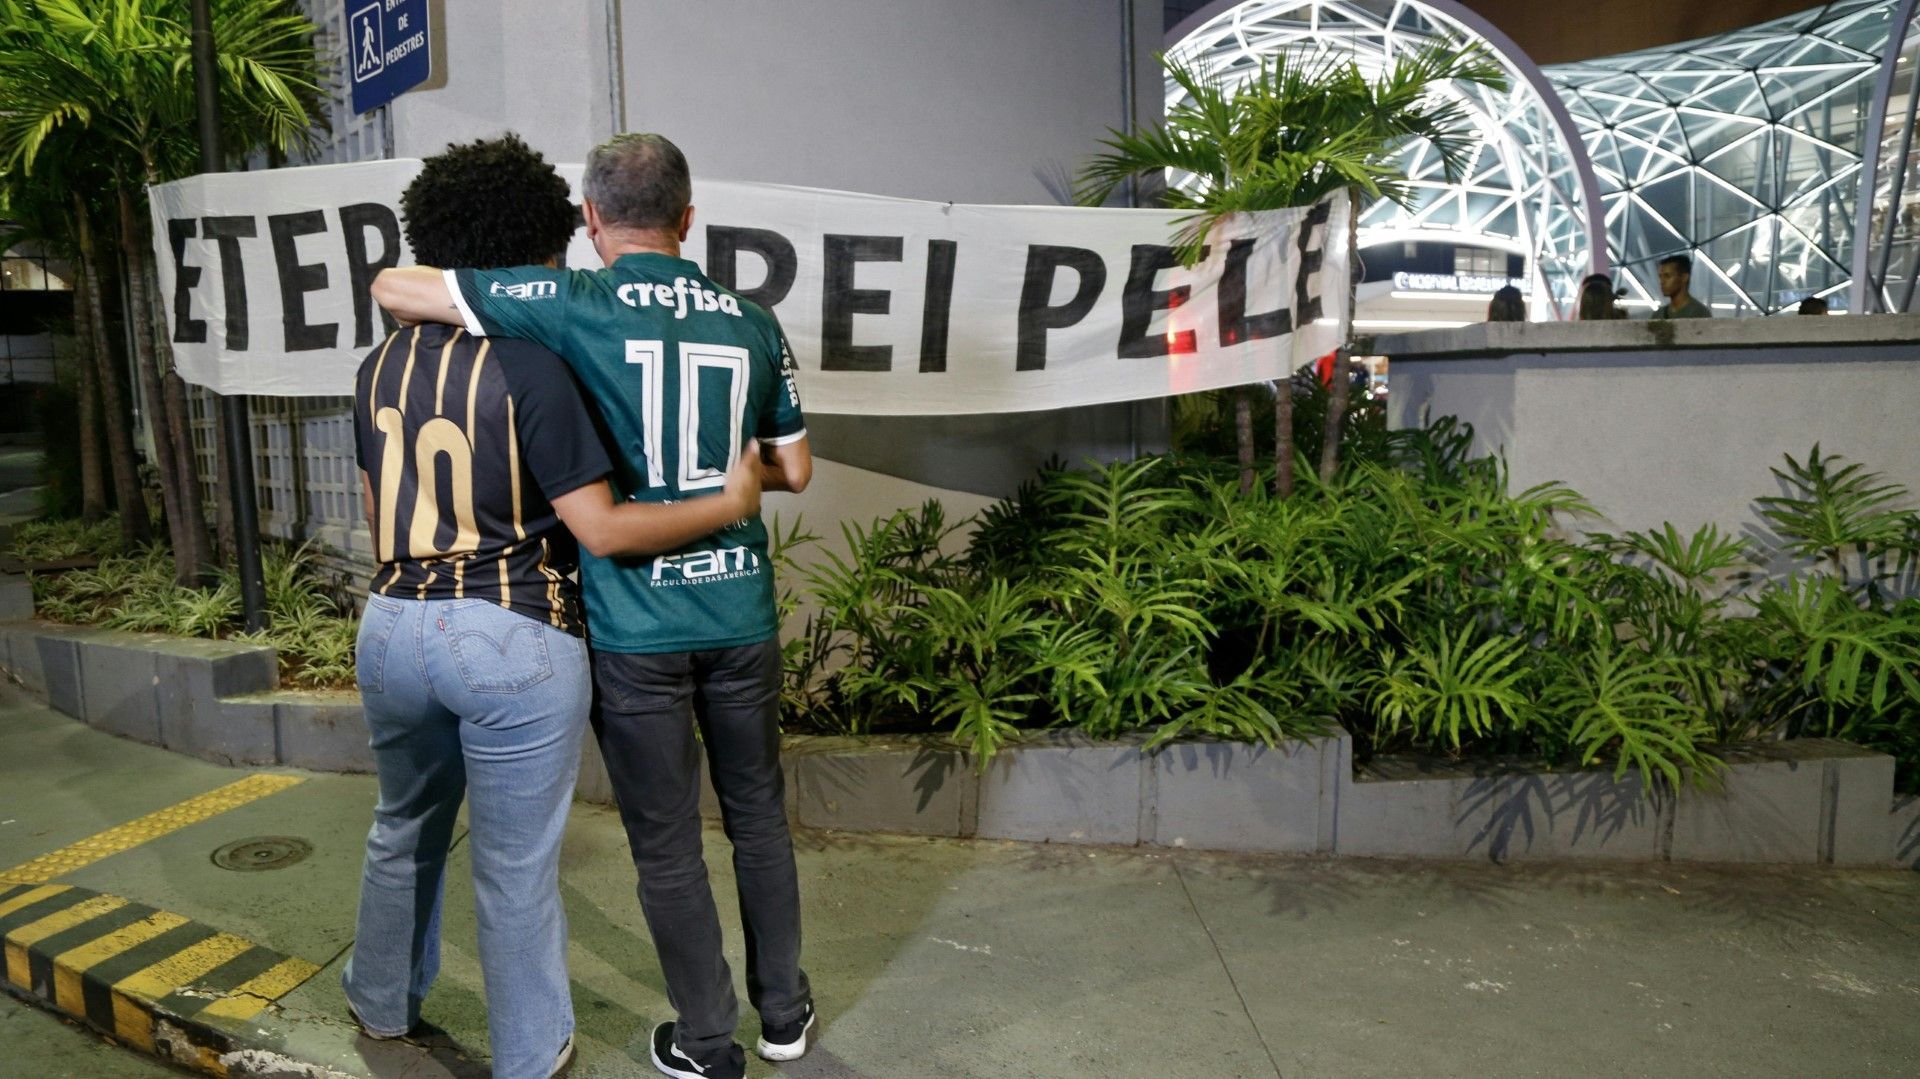 Brazil mourns the death of Pelé